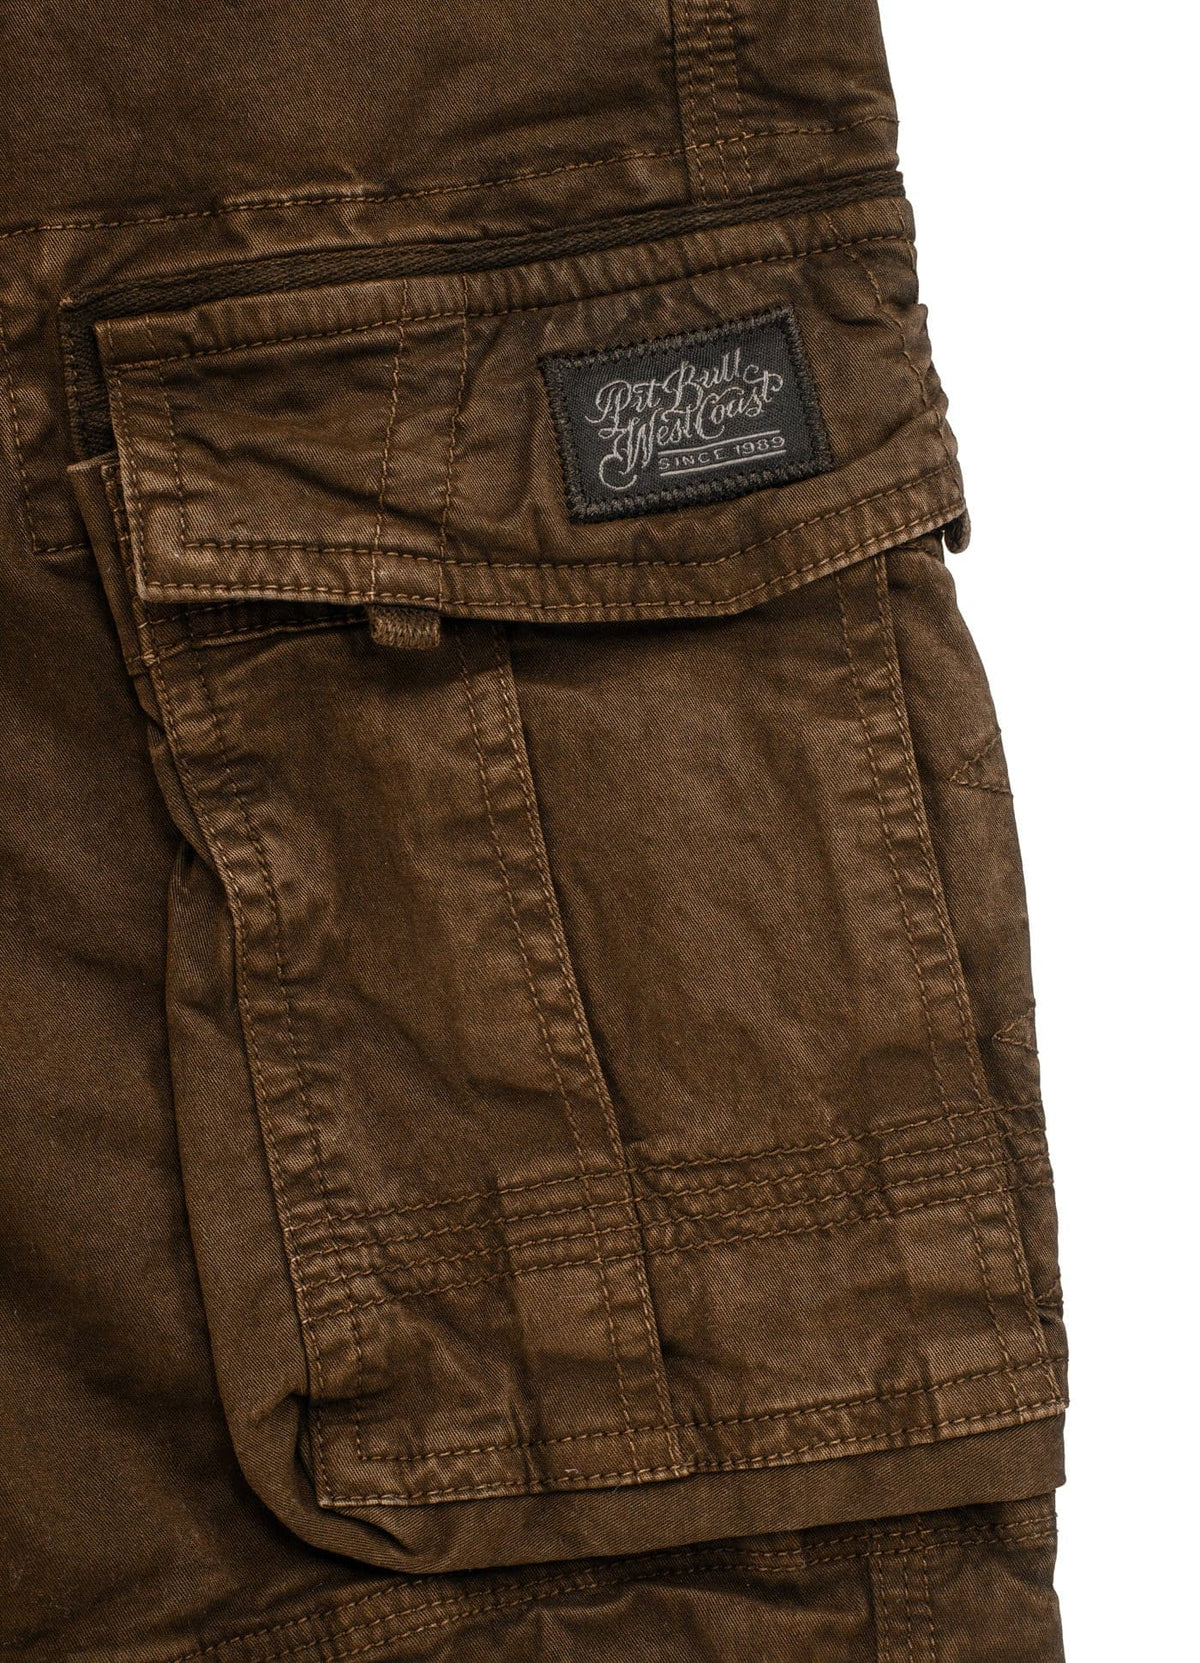 CARVER Brown Cargo shorts.